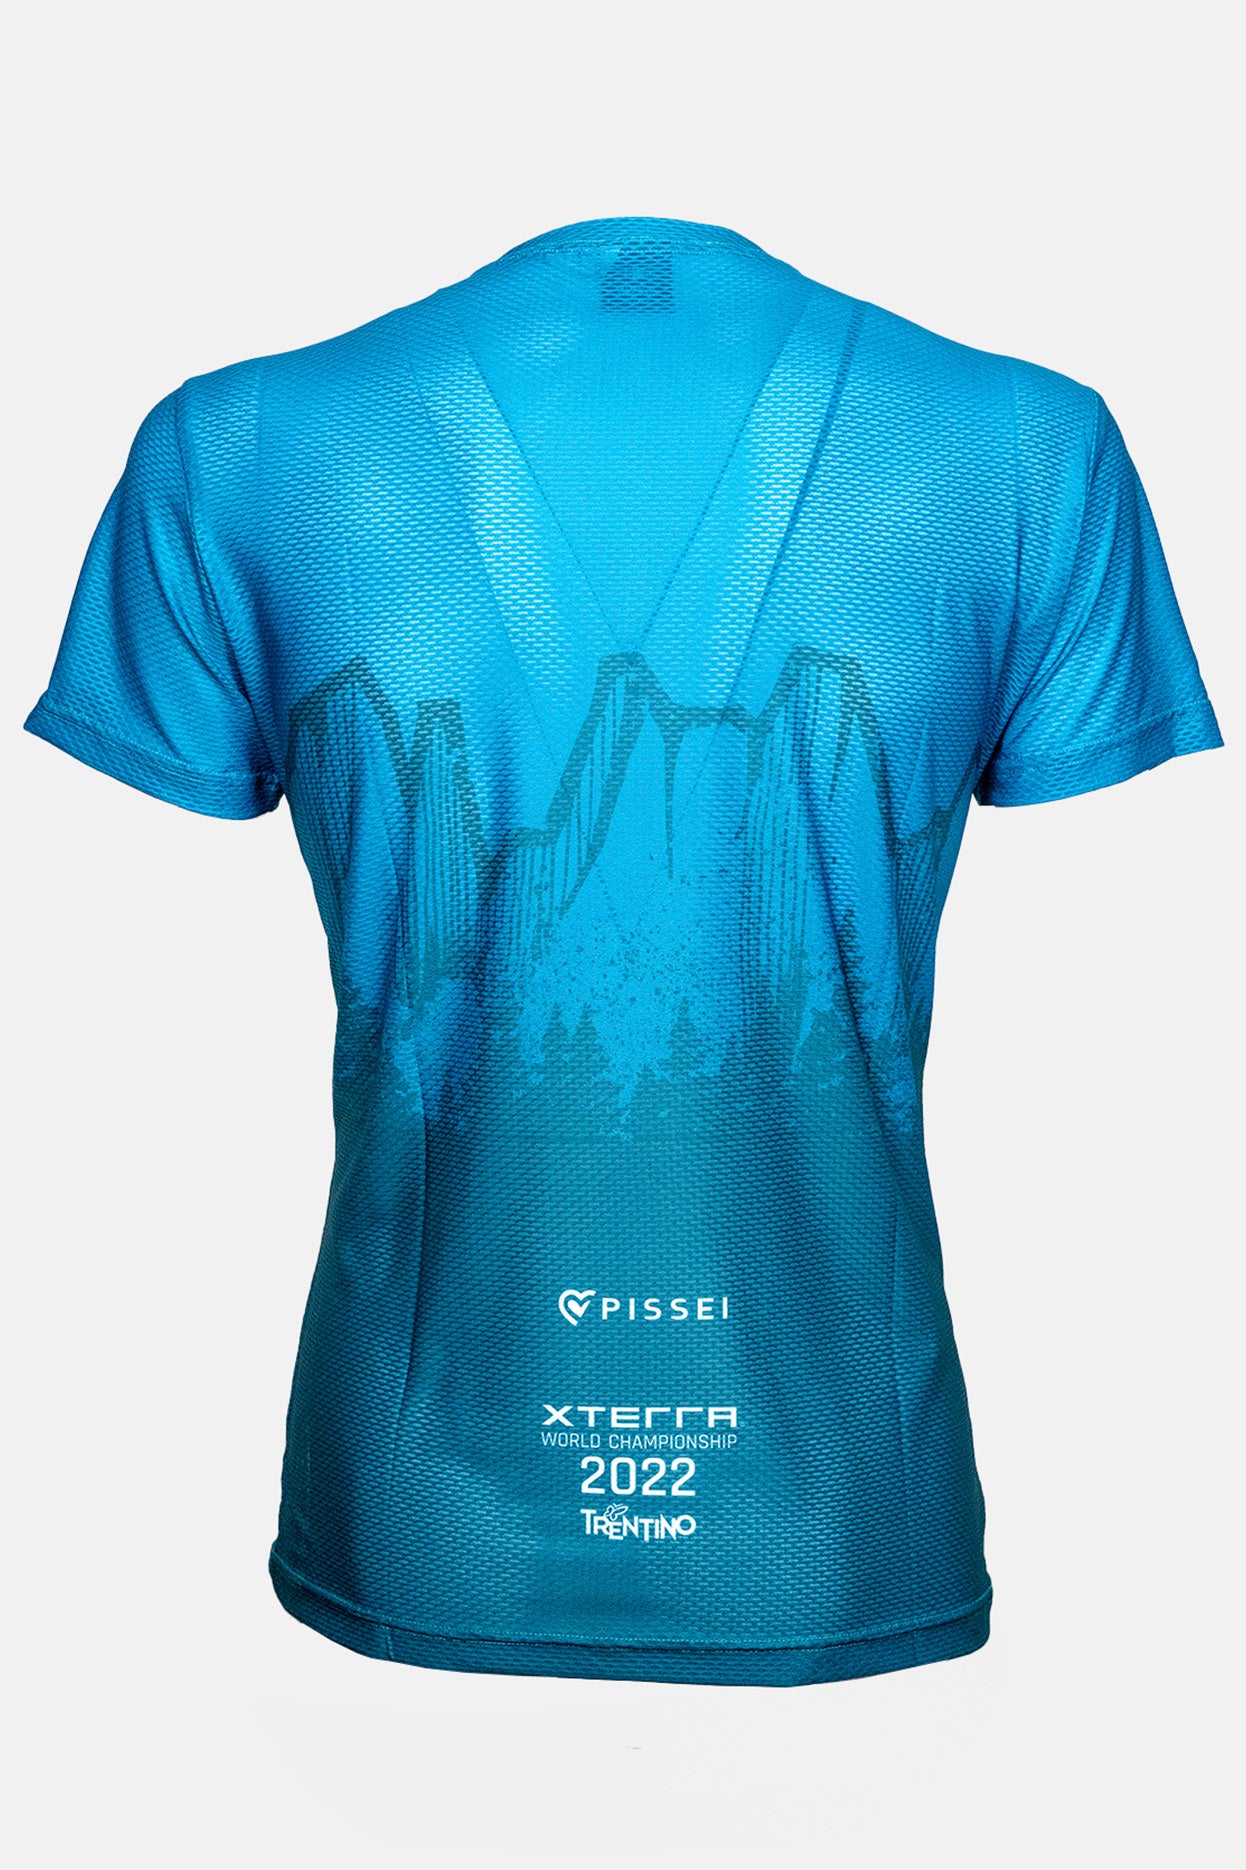 Men's XTERRA World Championship 2022 Running T-shirt